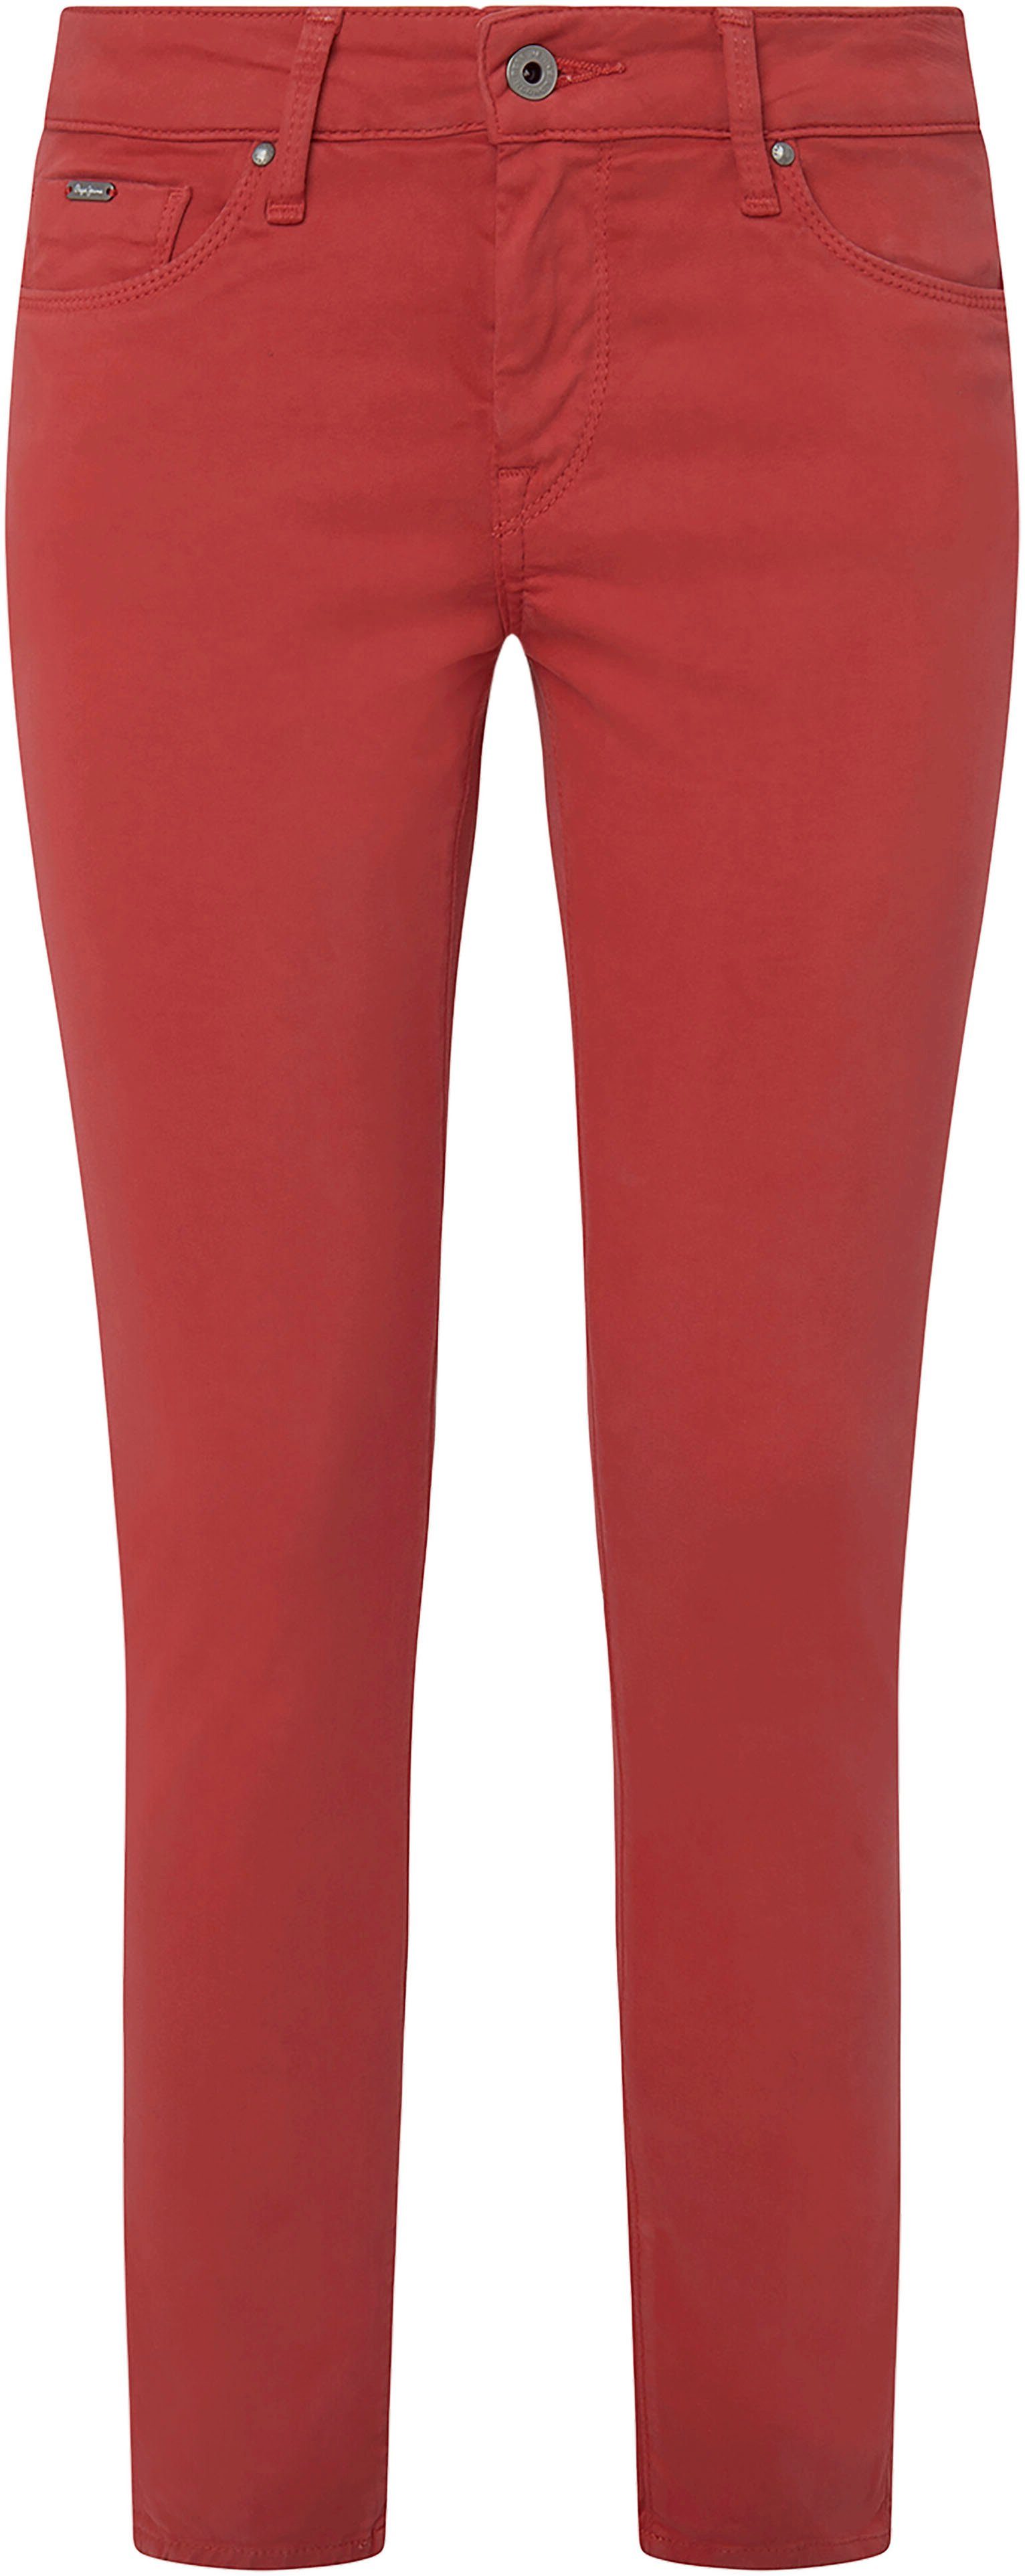 Jeans Skinny red 5-Pocket-Hose Soho studio Pepe